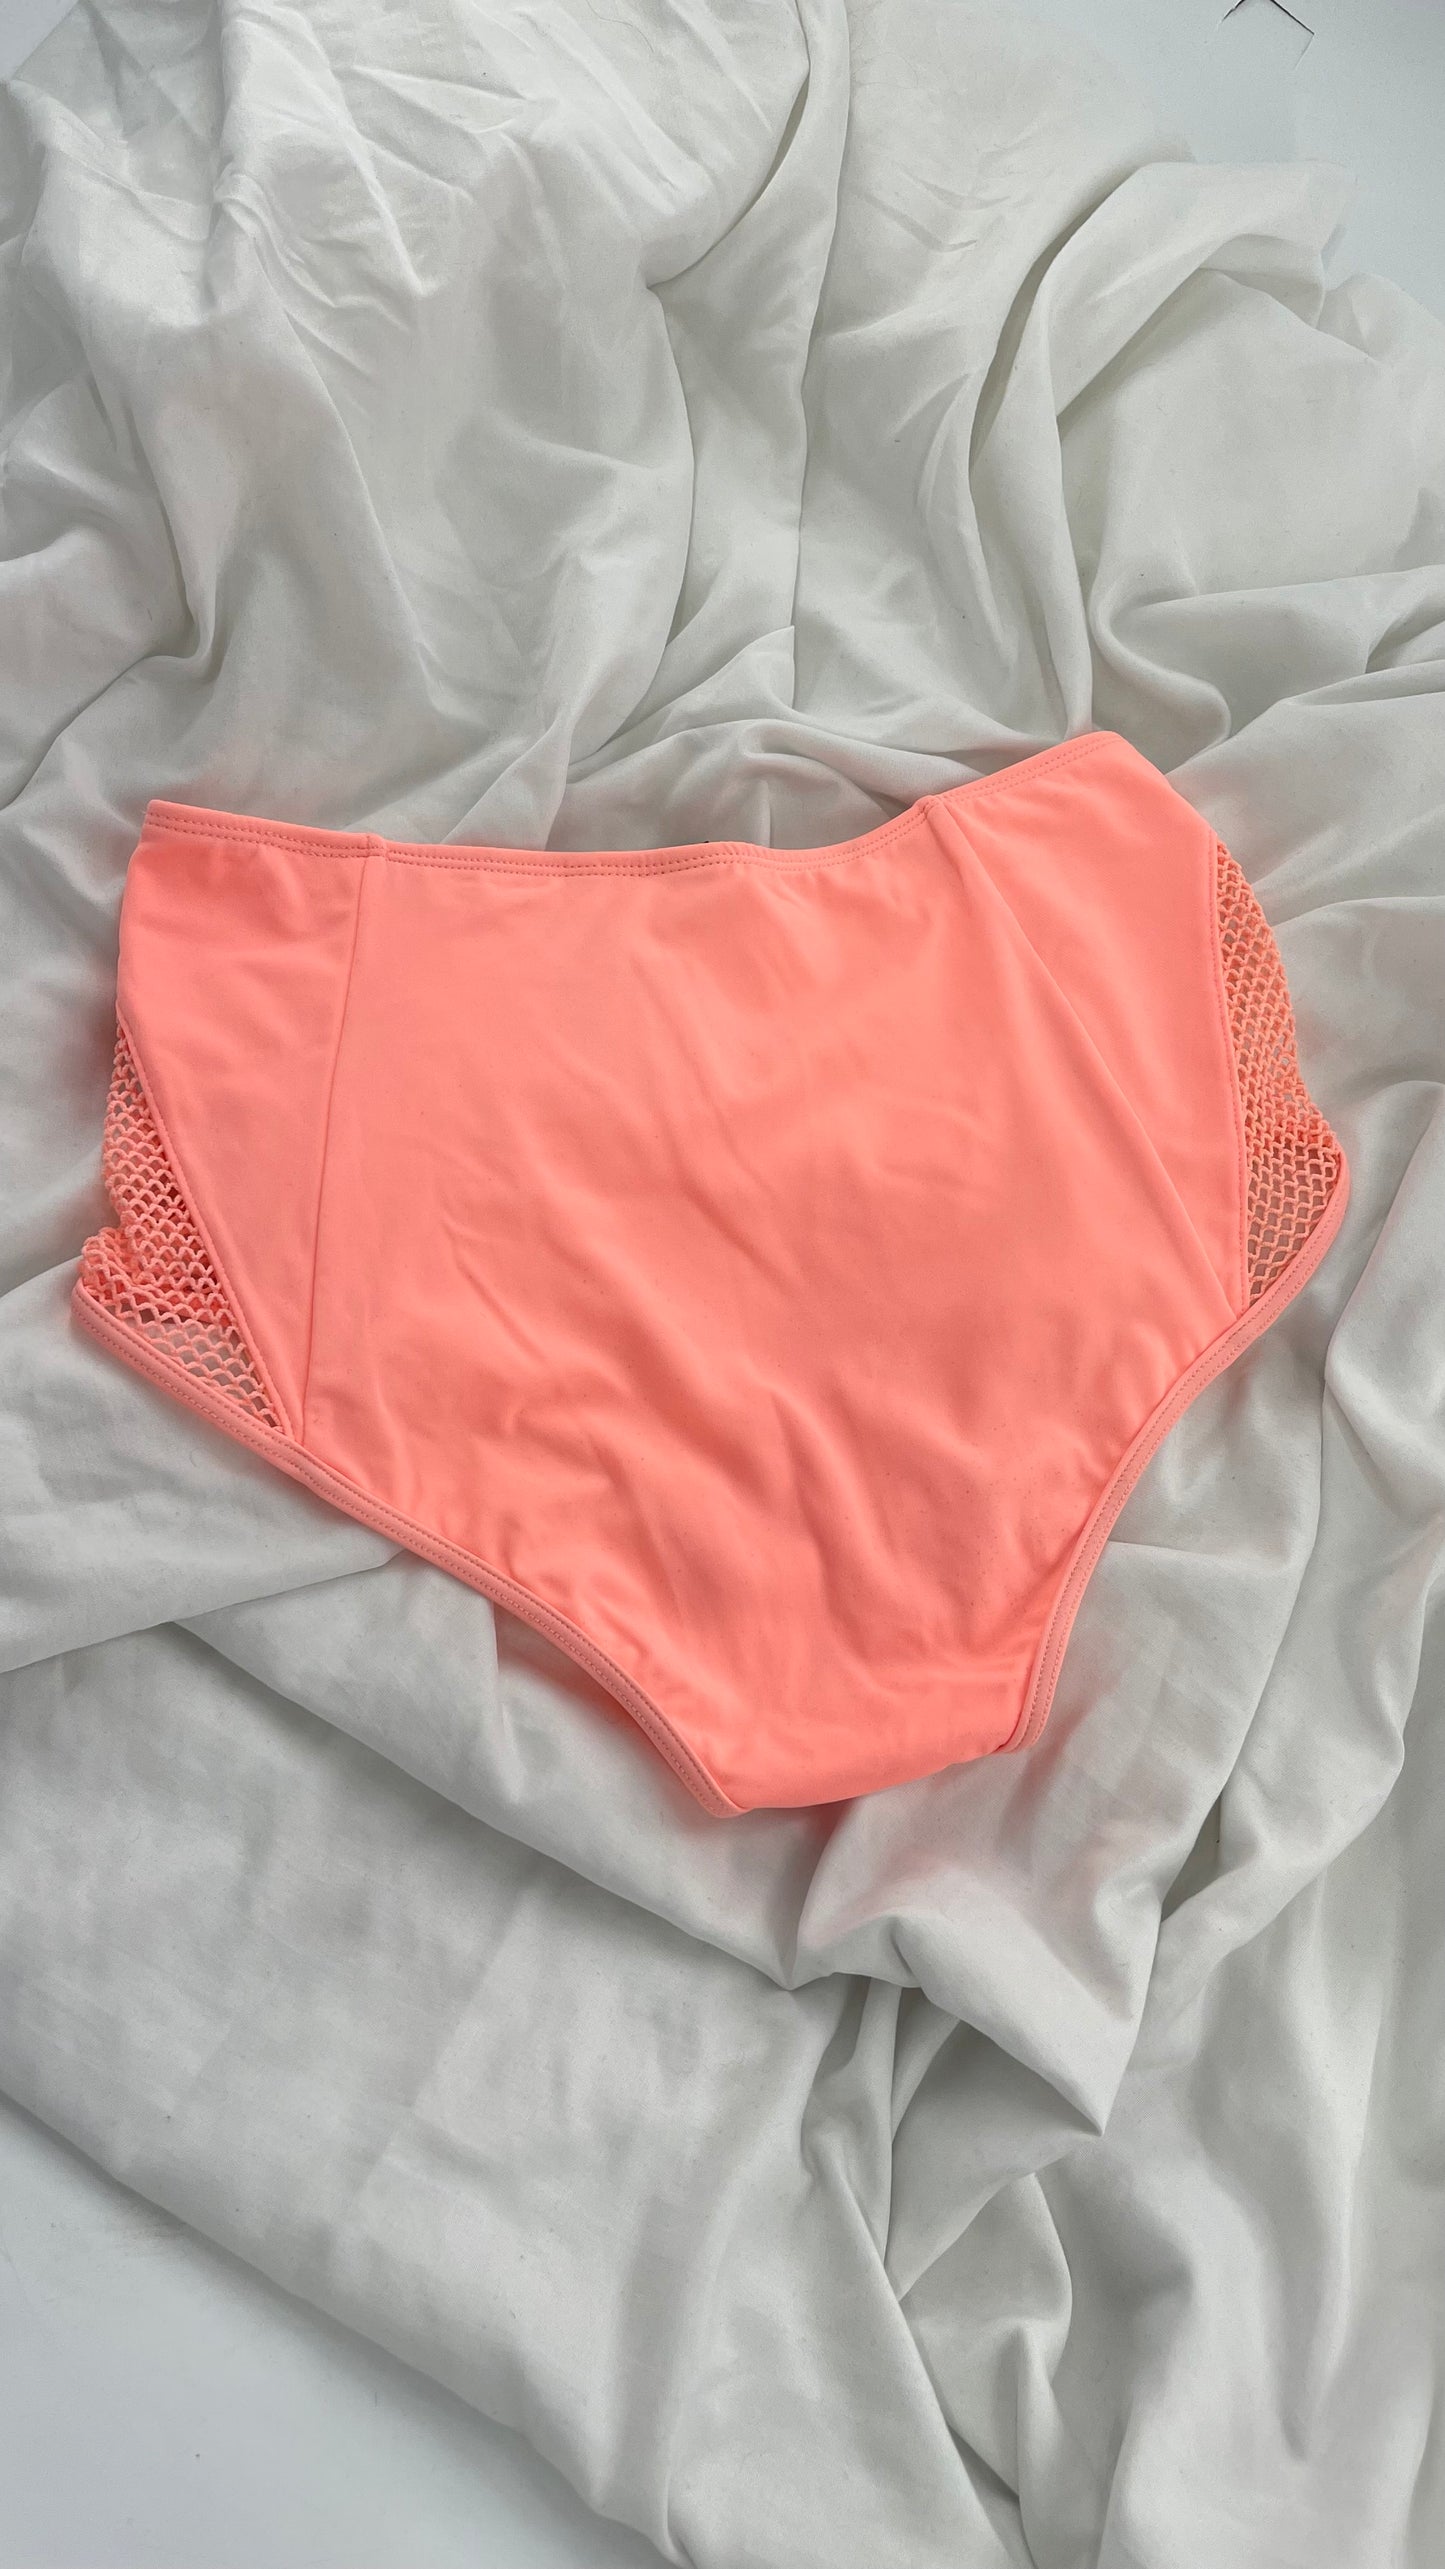 Pacsun LA Hearts Neon Pink Mid Rise Swim Bottoms with Mesh Sides (Medium)